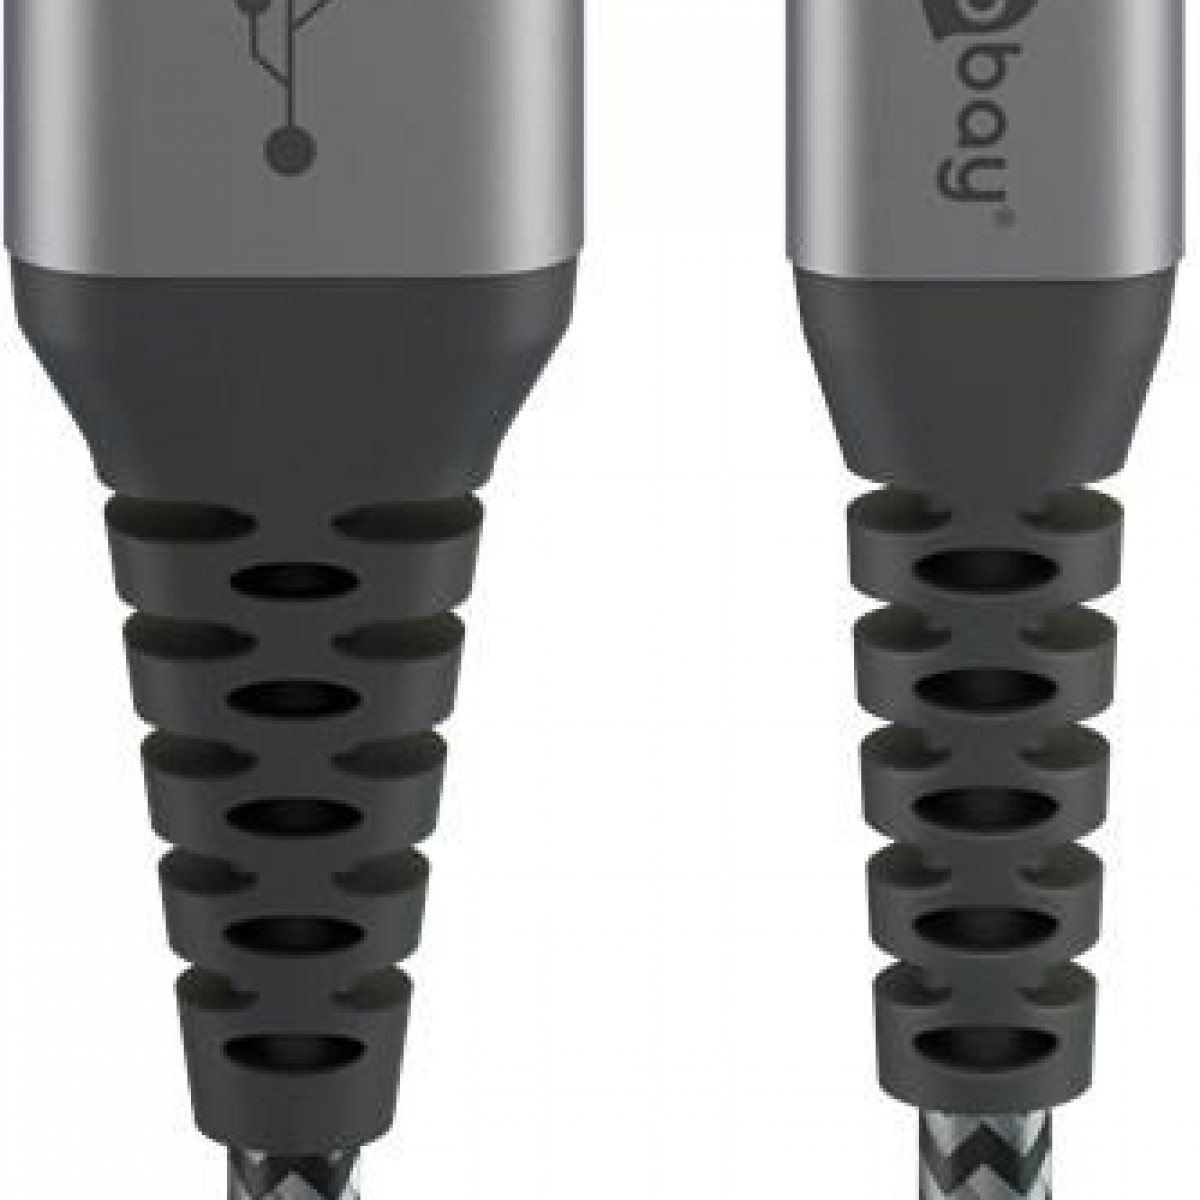 auf mit 0,5 kabel, GOOBAY Lightning m Lightning (spacegrau/silber), Textilkabel Metallsteckern USB-A